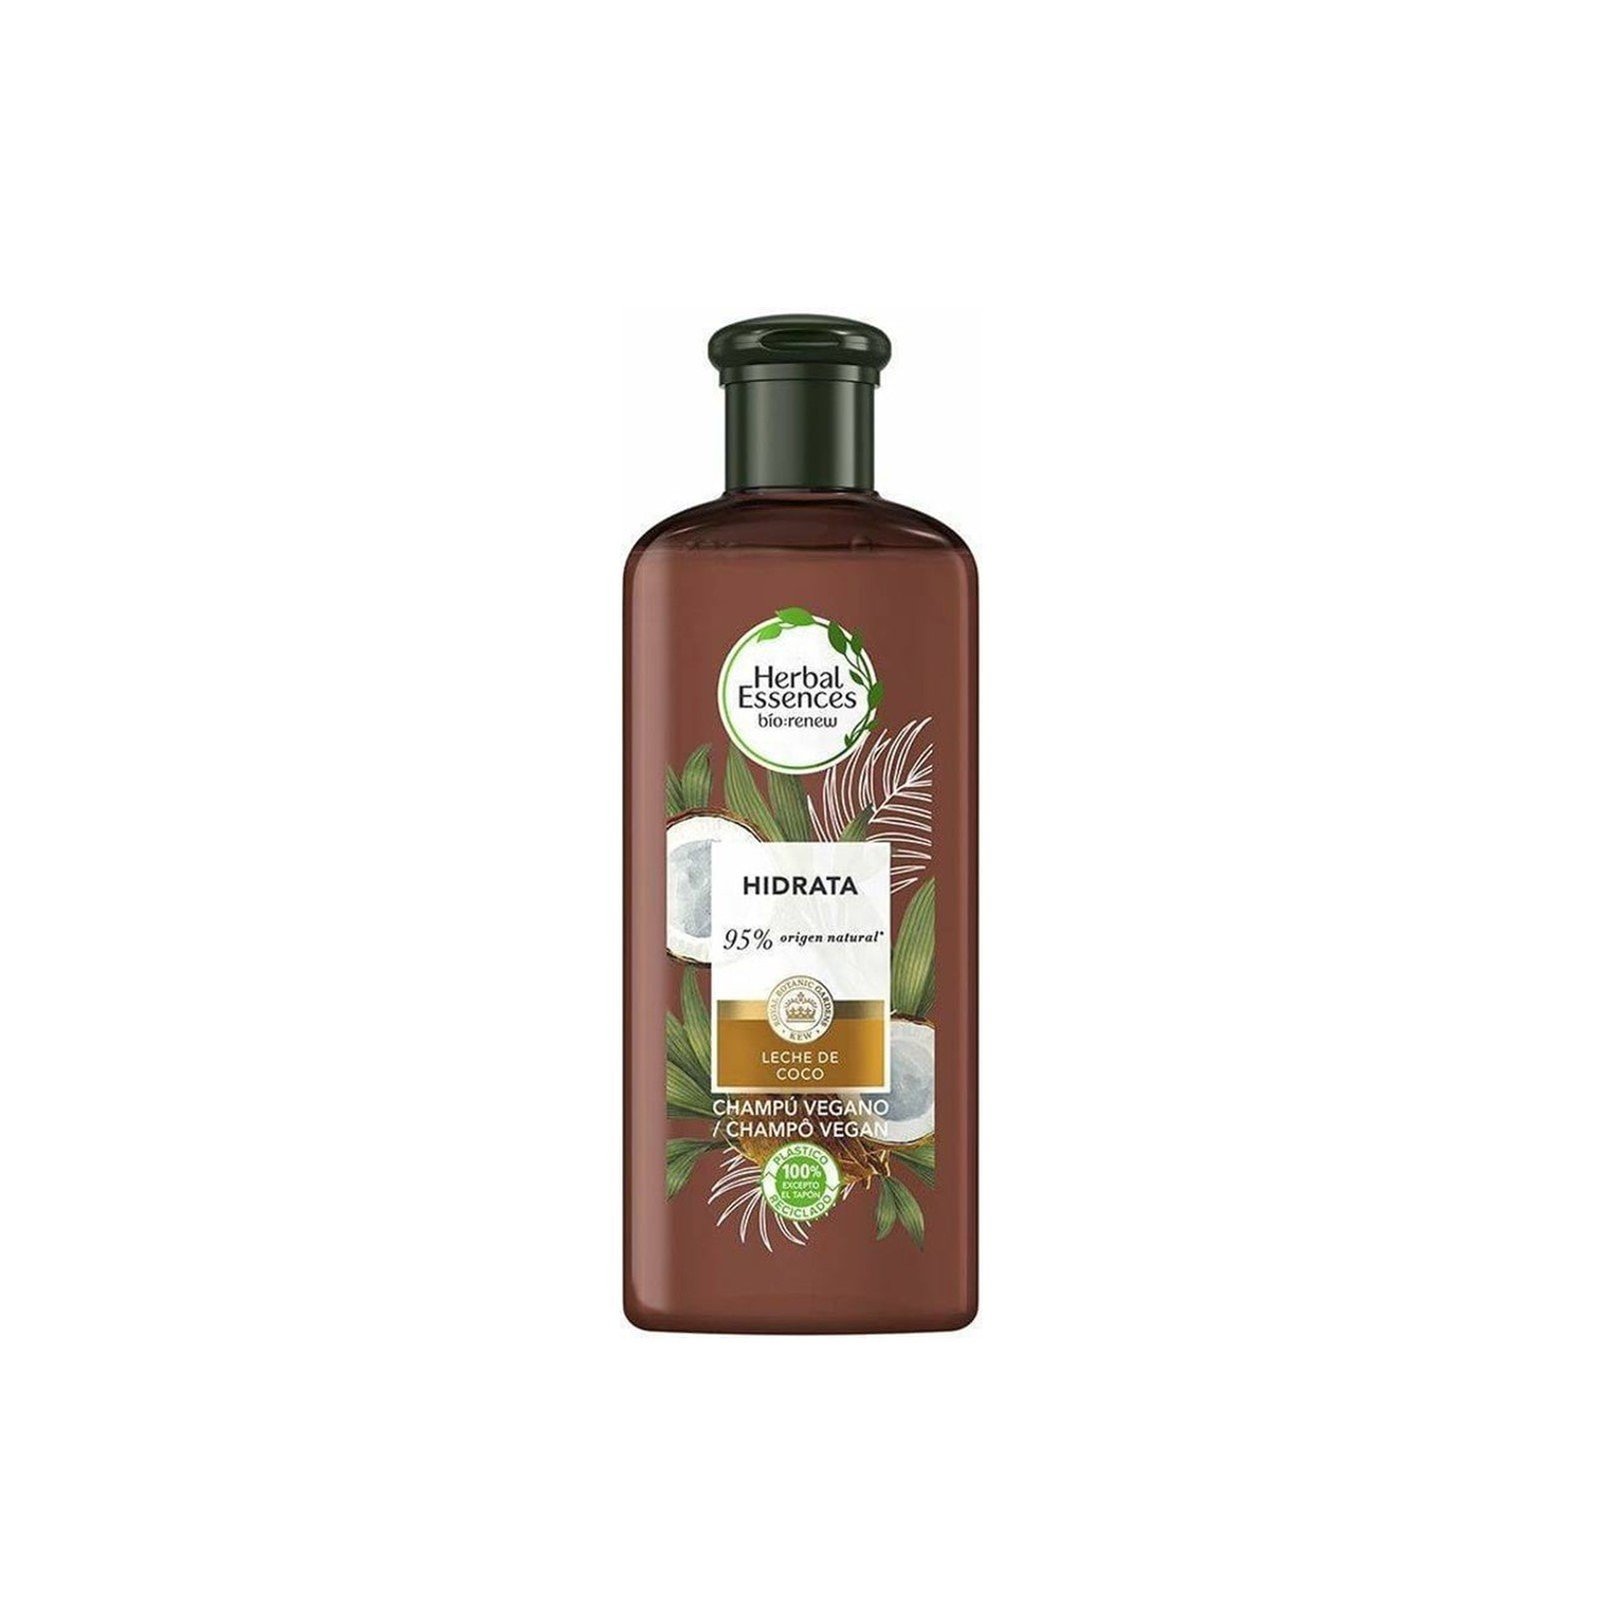 https://static.beautytocare.com/cdn-cgi/image/width=1600,height=1600,f=auto/media/catalog/product//h/e/herbal-essences-bio-renew-hydrate-coconut-milk-shampoo-250ml_2_1.jpg